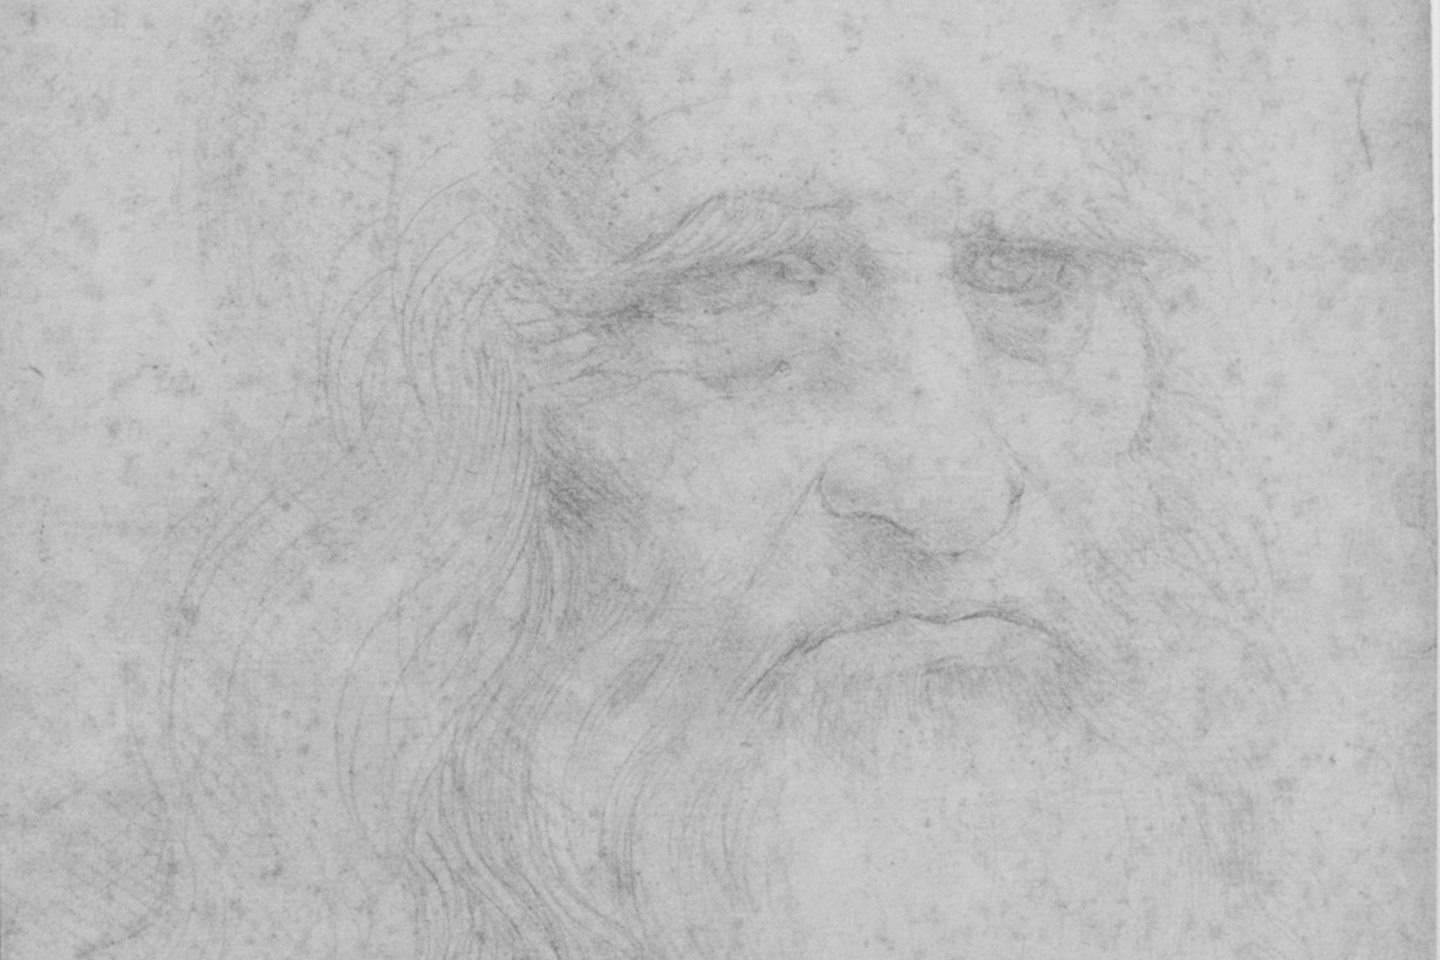 Leonardo da Vinci.<br>Scanpix/REX nuotr.